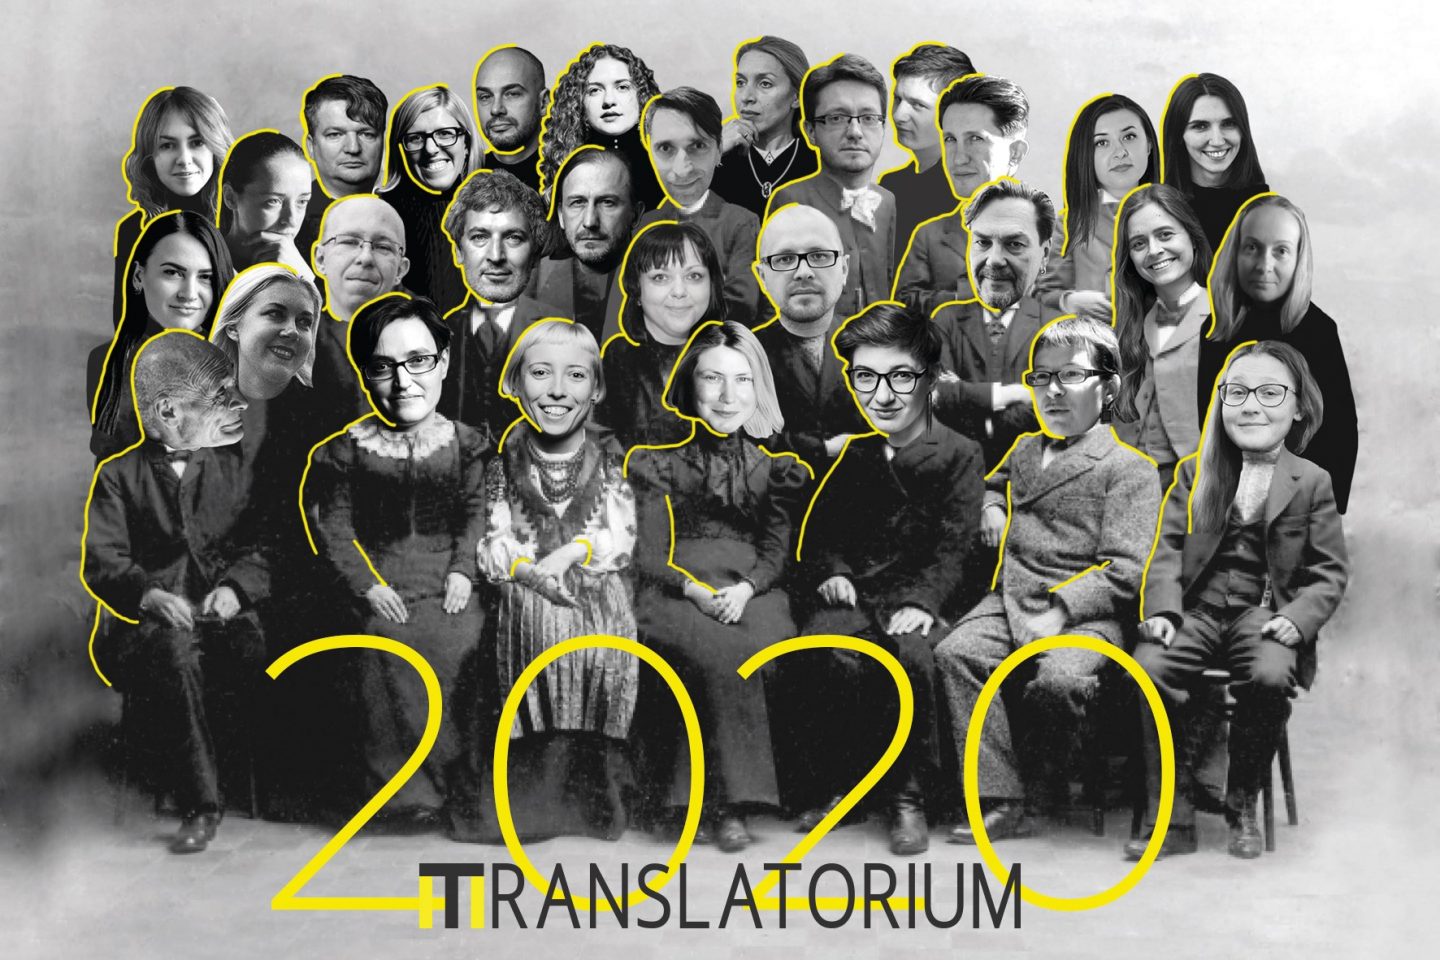 Літературно-перекладацький фестиваль TRANSLATORIUM